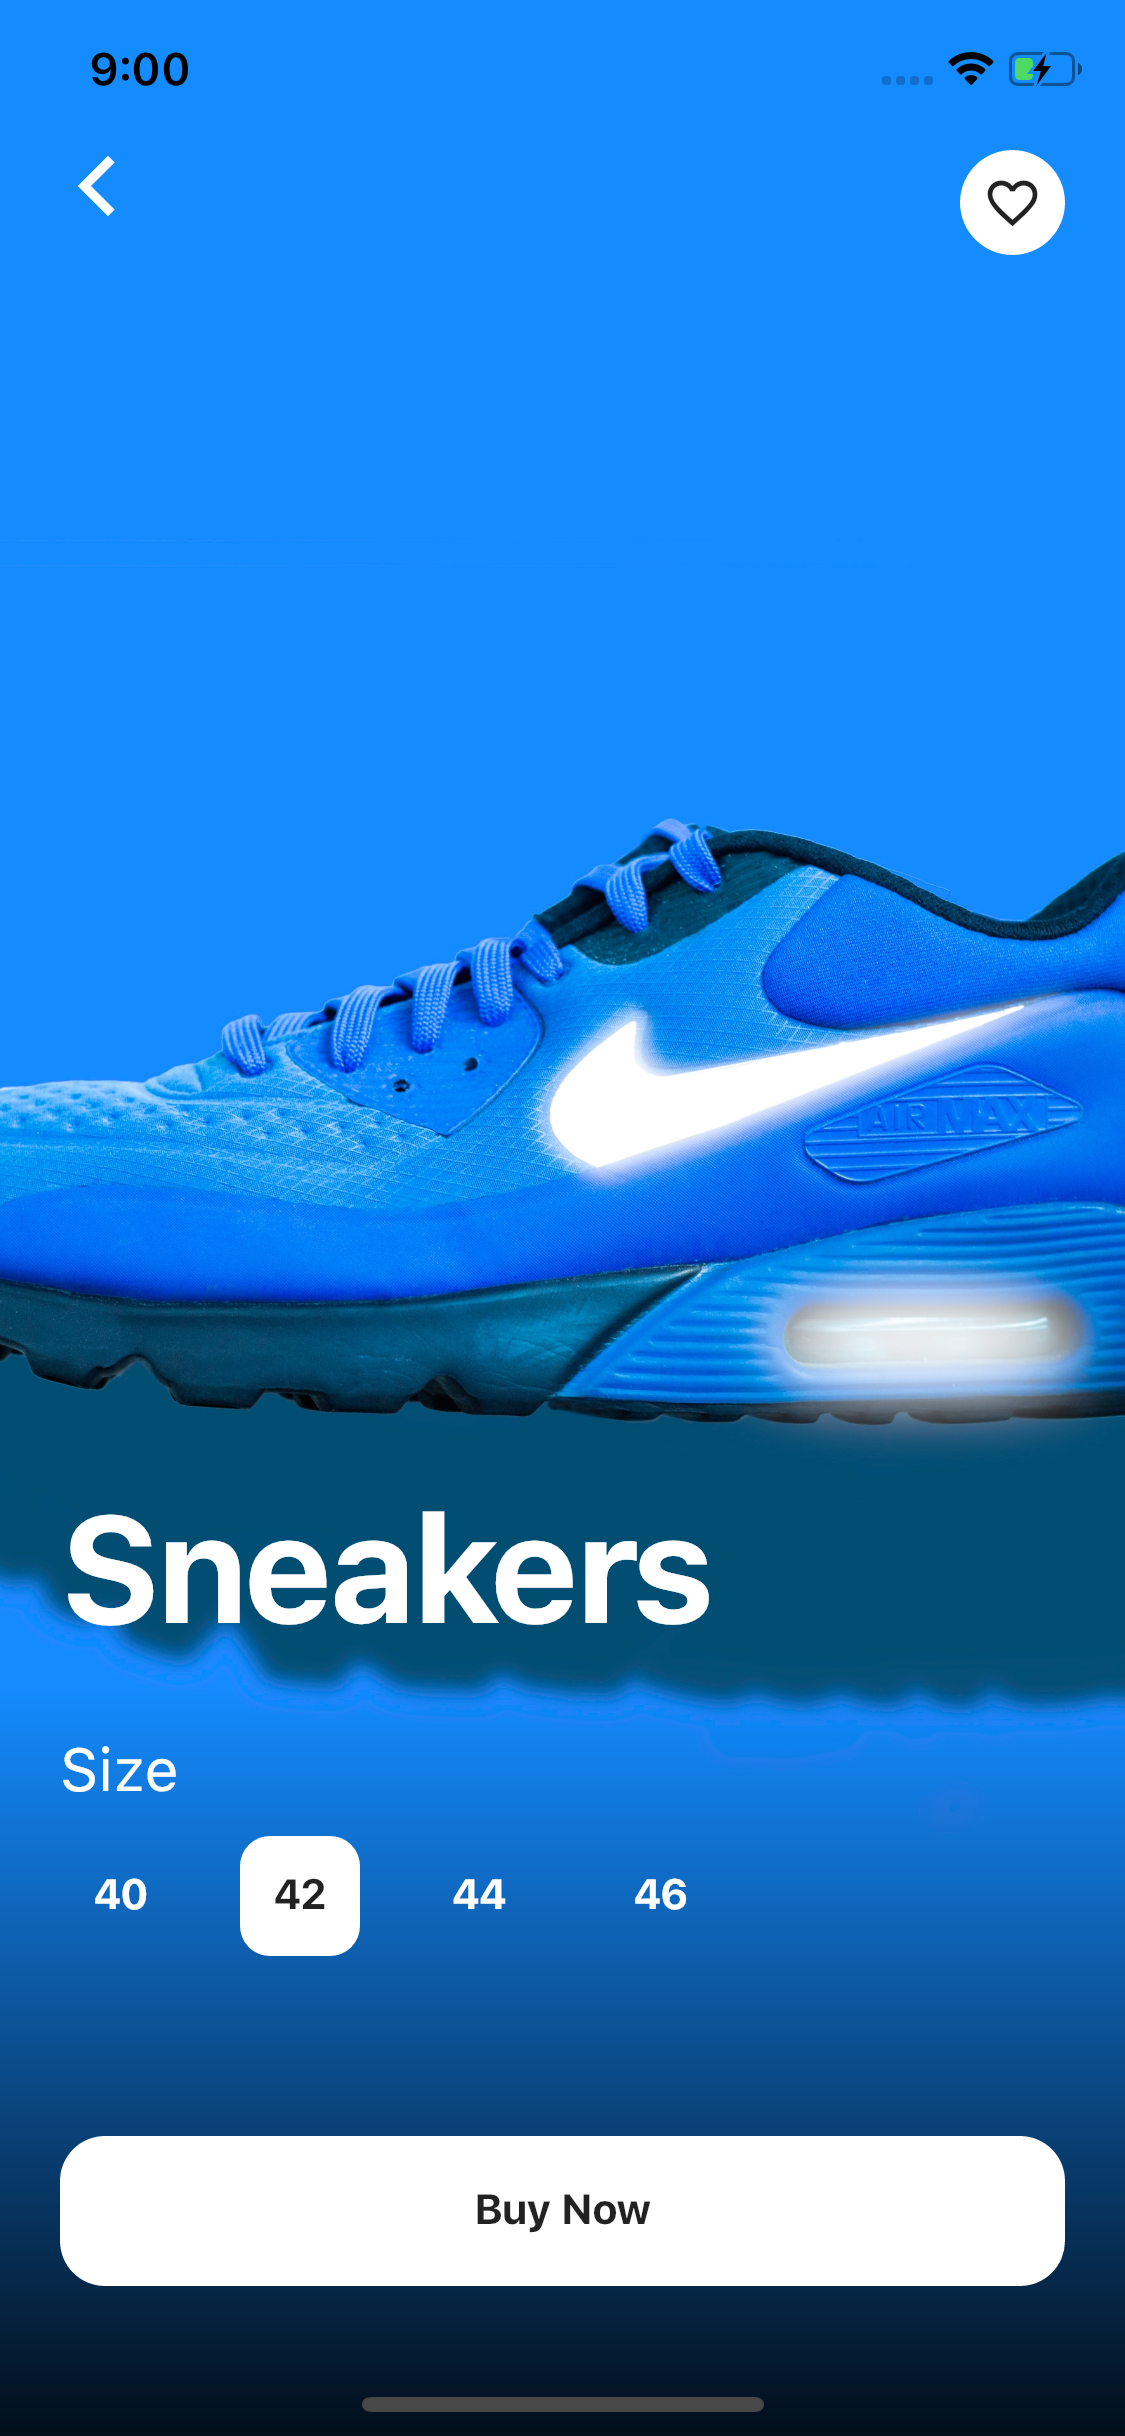 Flutter Shoes Shop Application UI Design and Animation